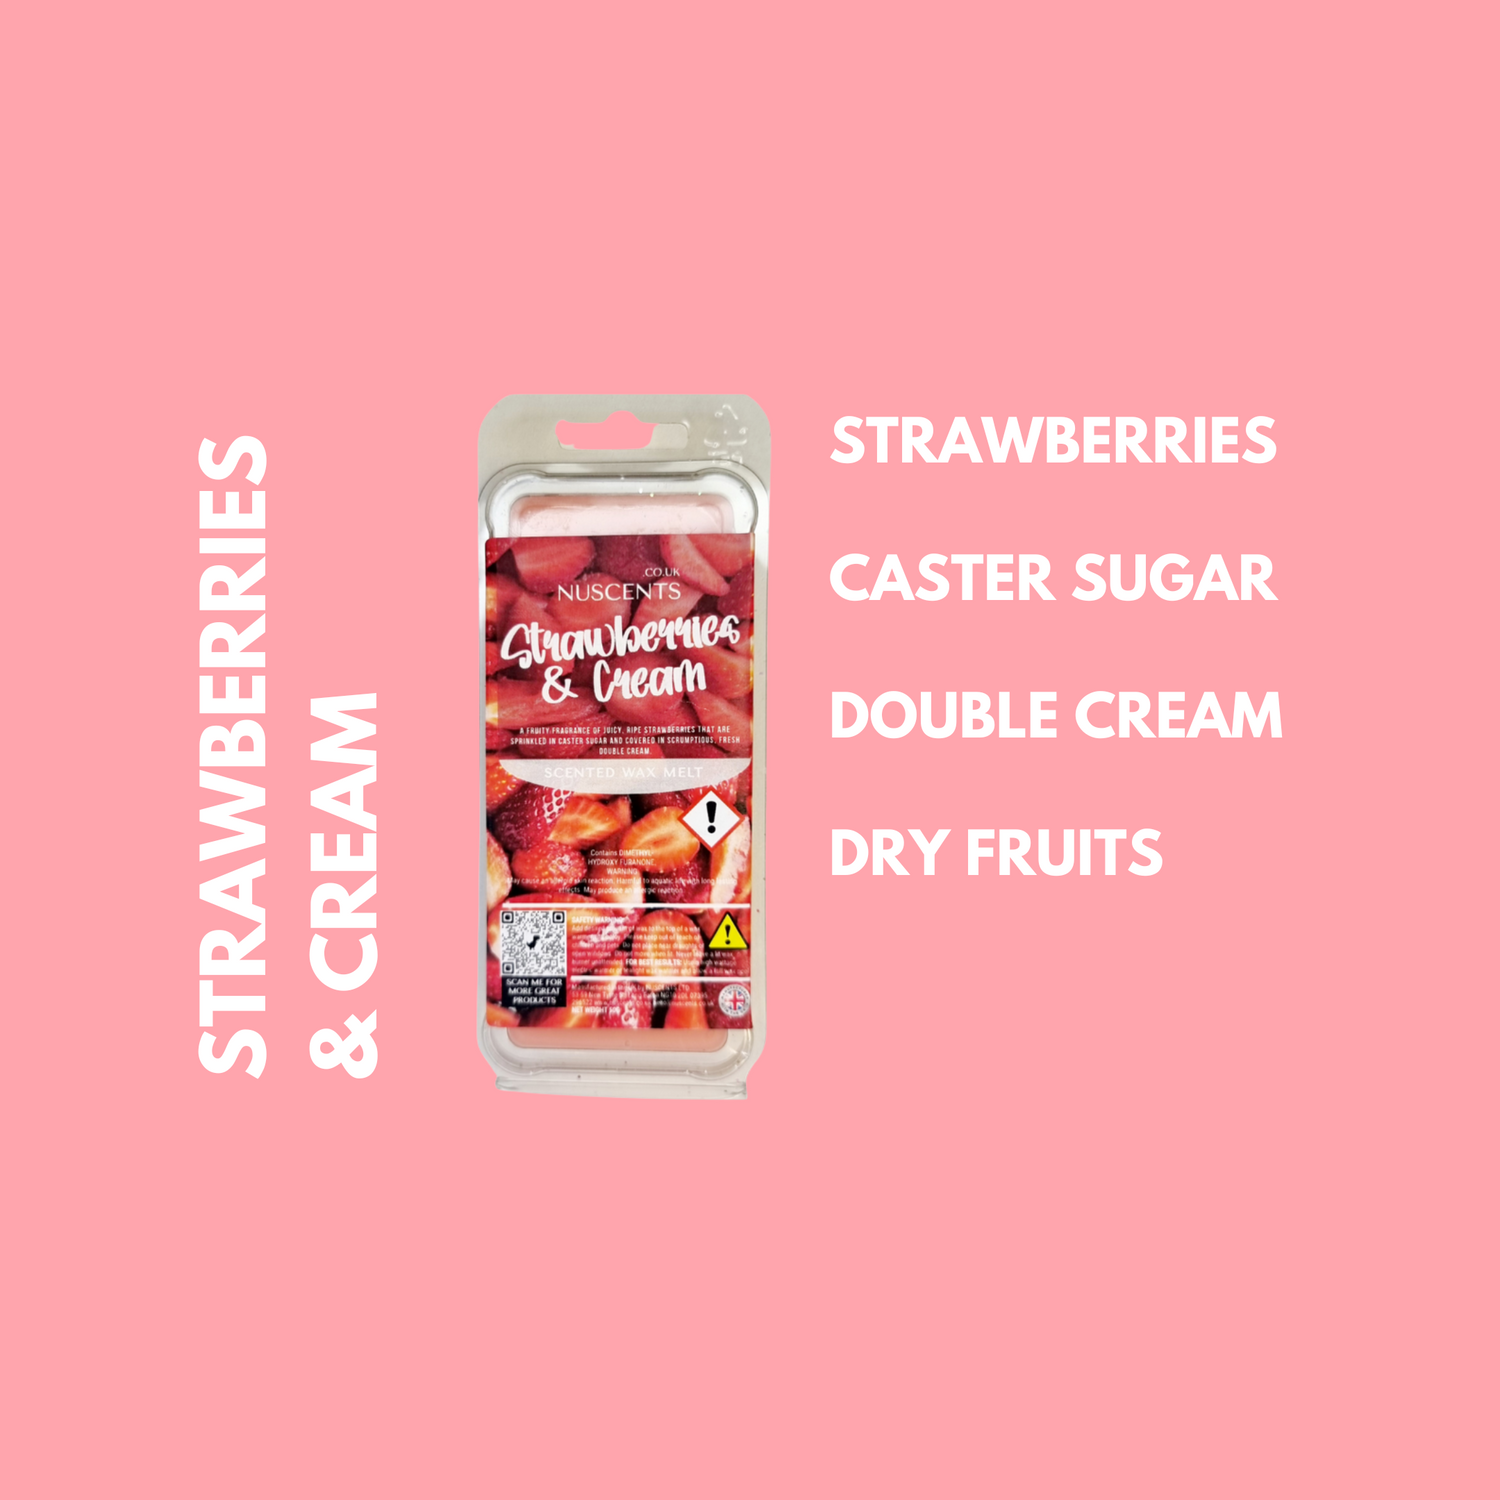 Strawberries & Cream Wax Melt Scent Notes